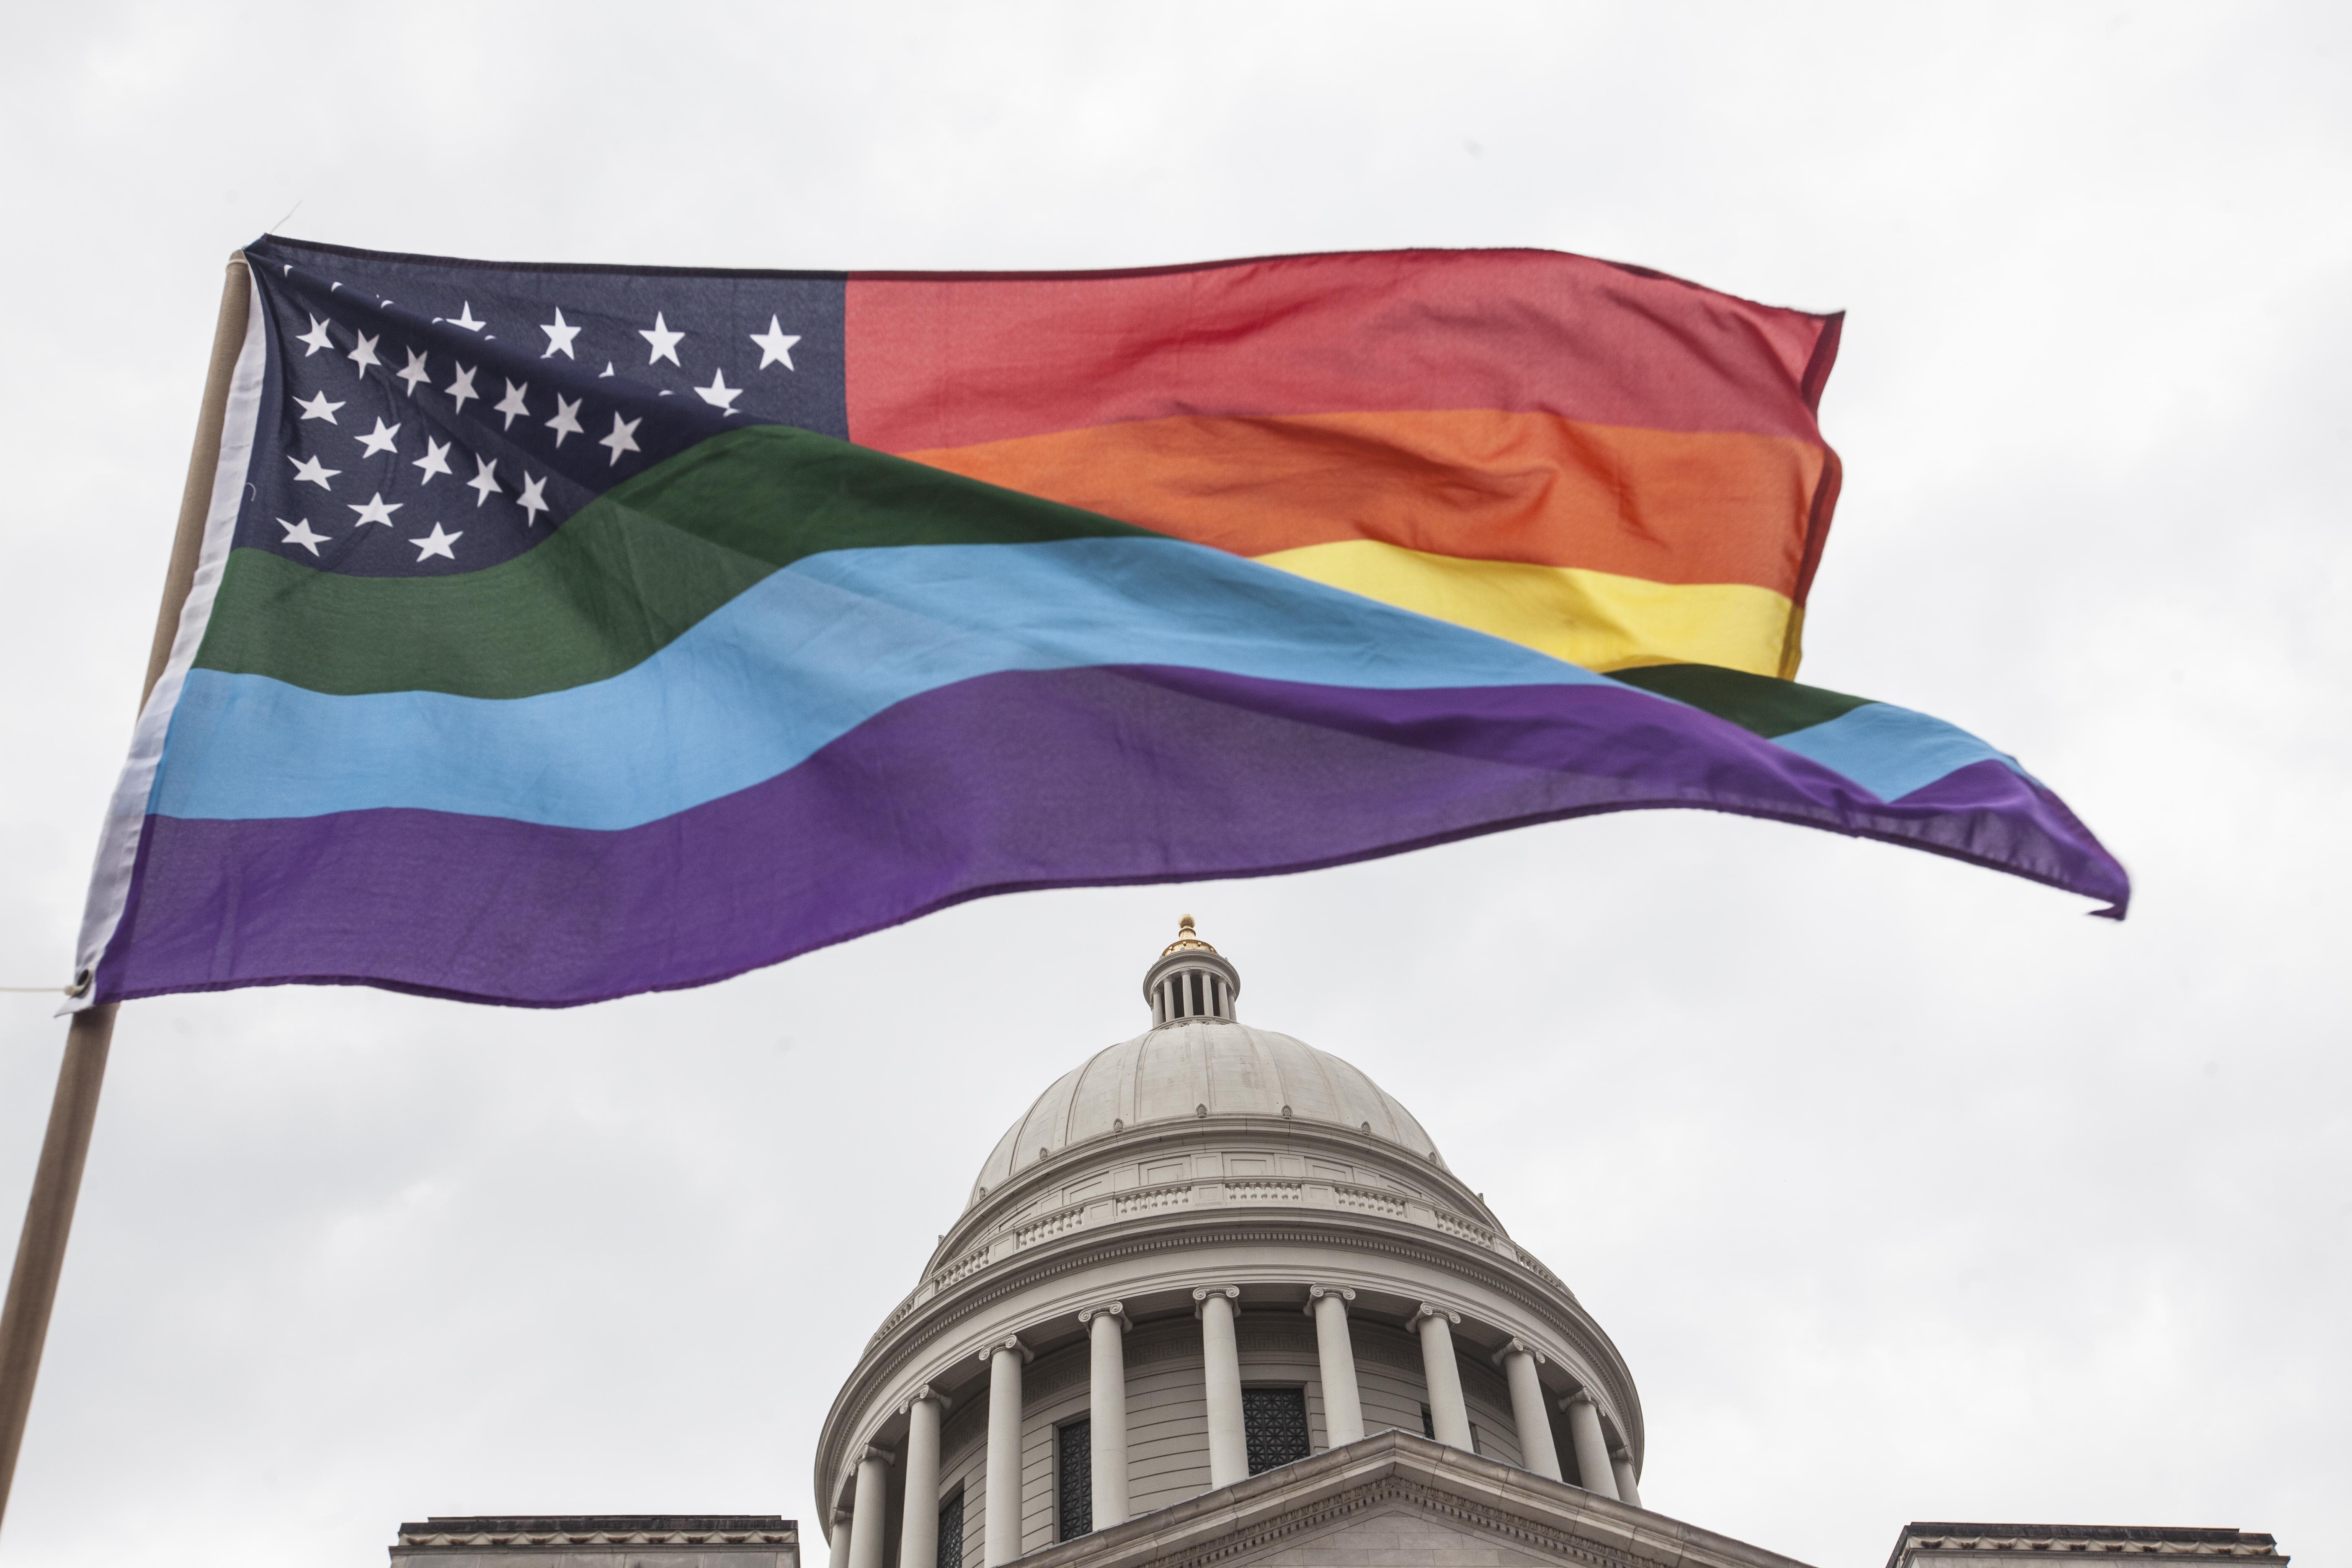 Arkansas passes single most extreme anti-trans law targeting trans kids